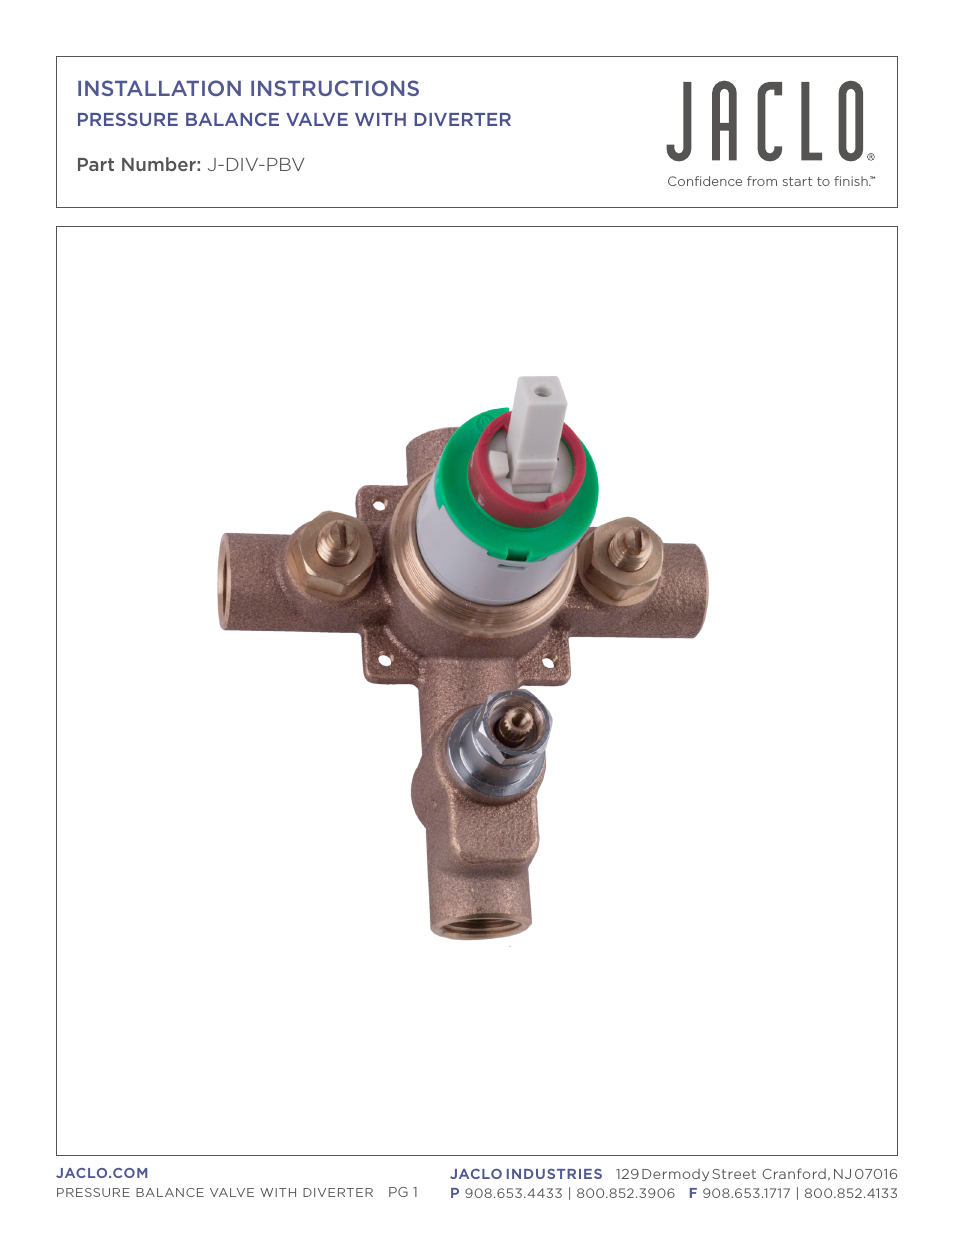 Pressure balance valve with diverter - A278-